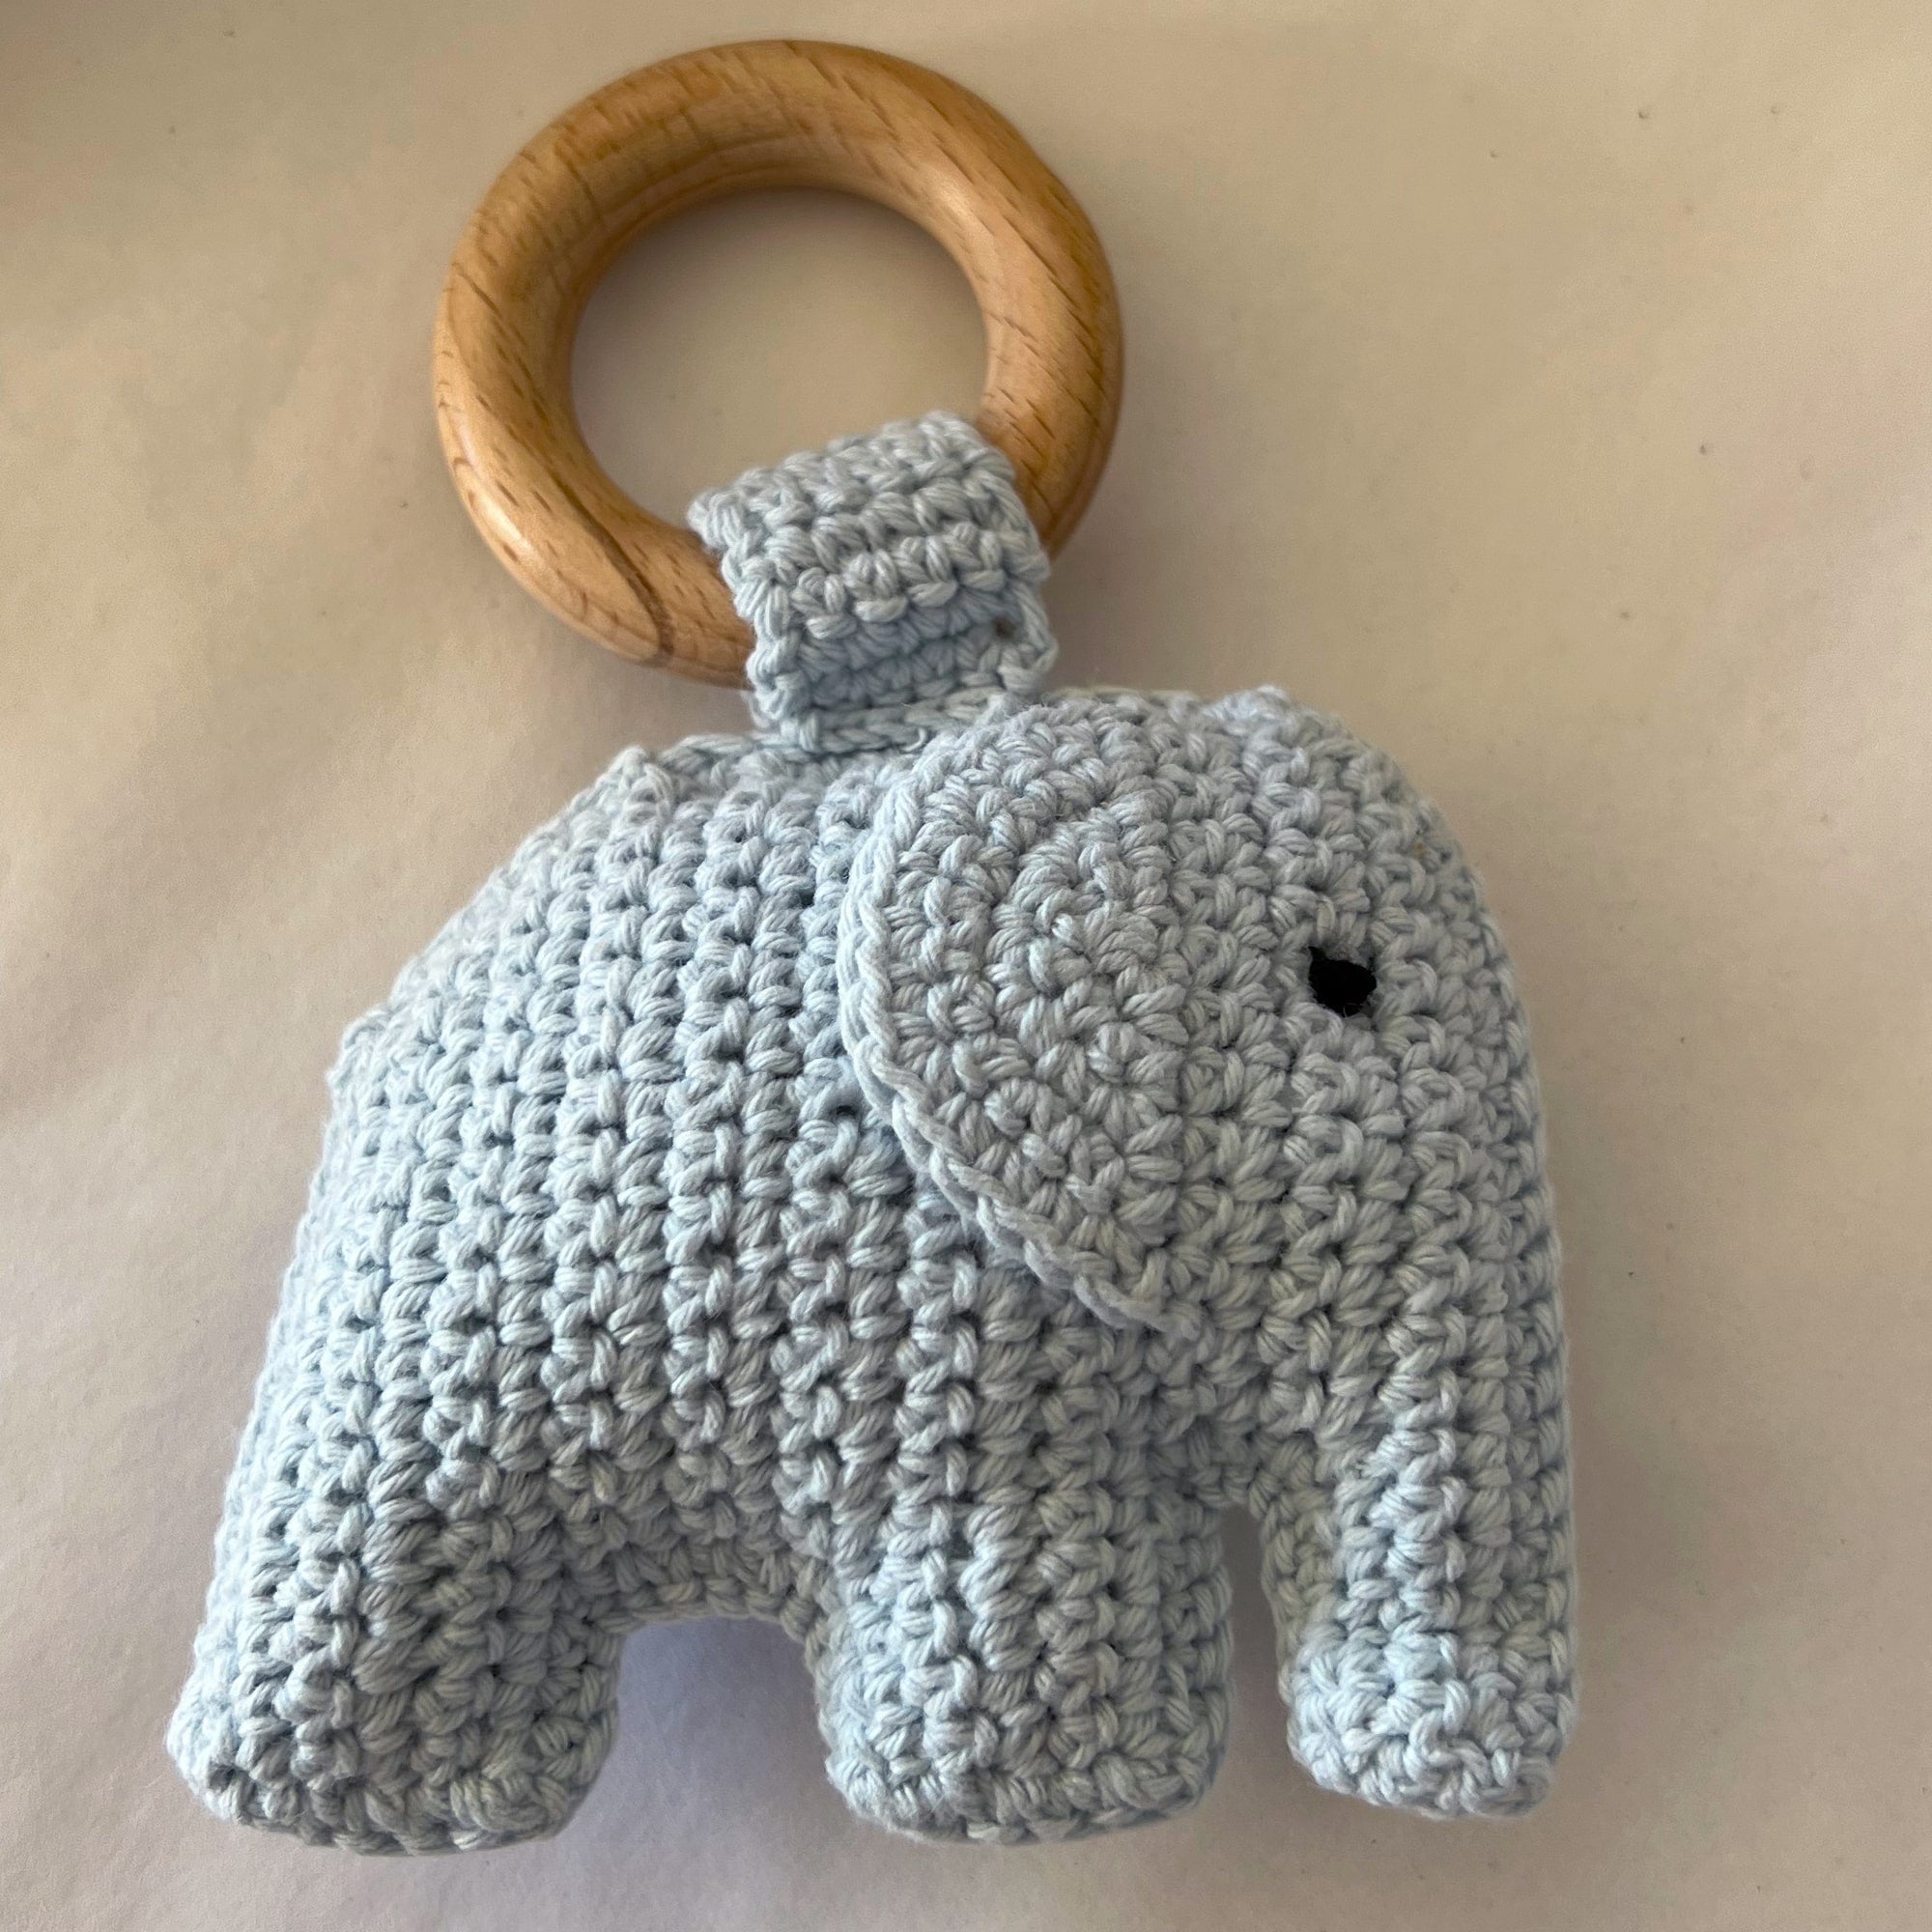 Elephant Crochet Teether - Buy Teether at Louie Meets Lola